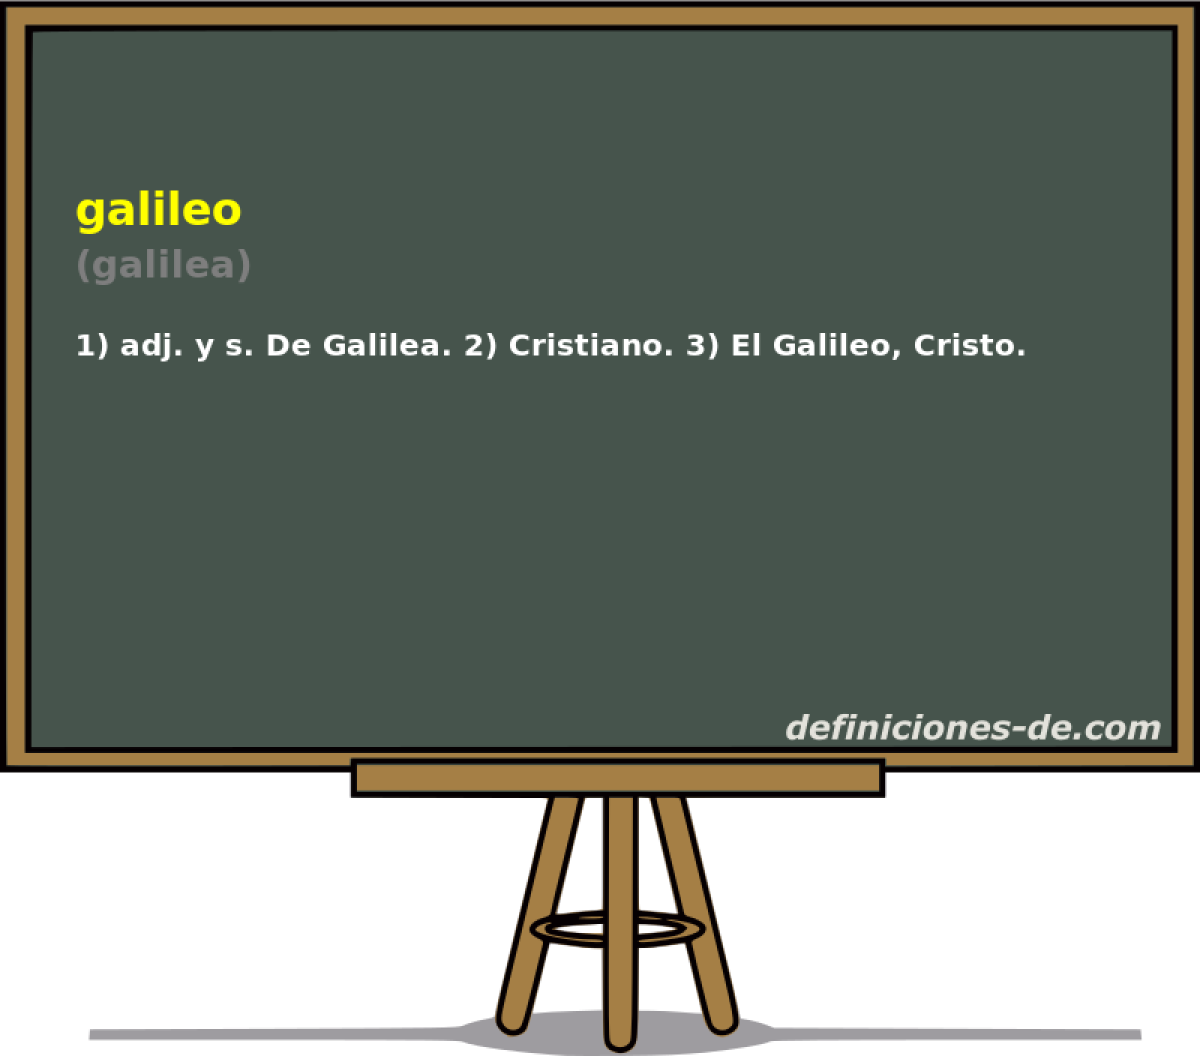 galileo (galilea)